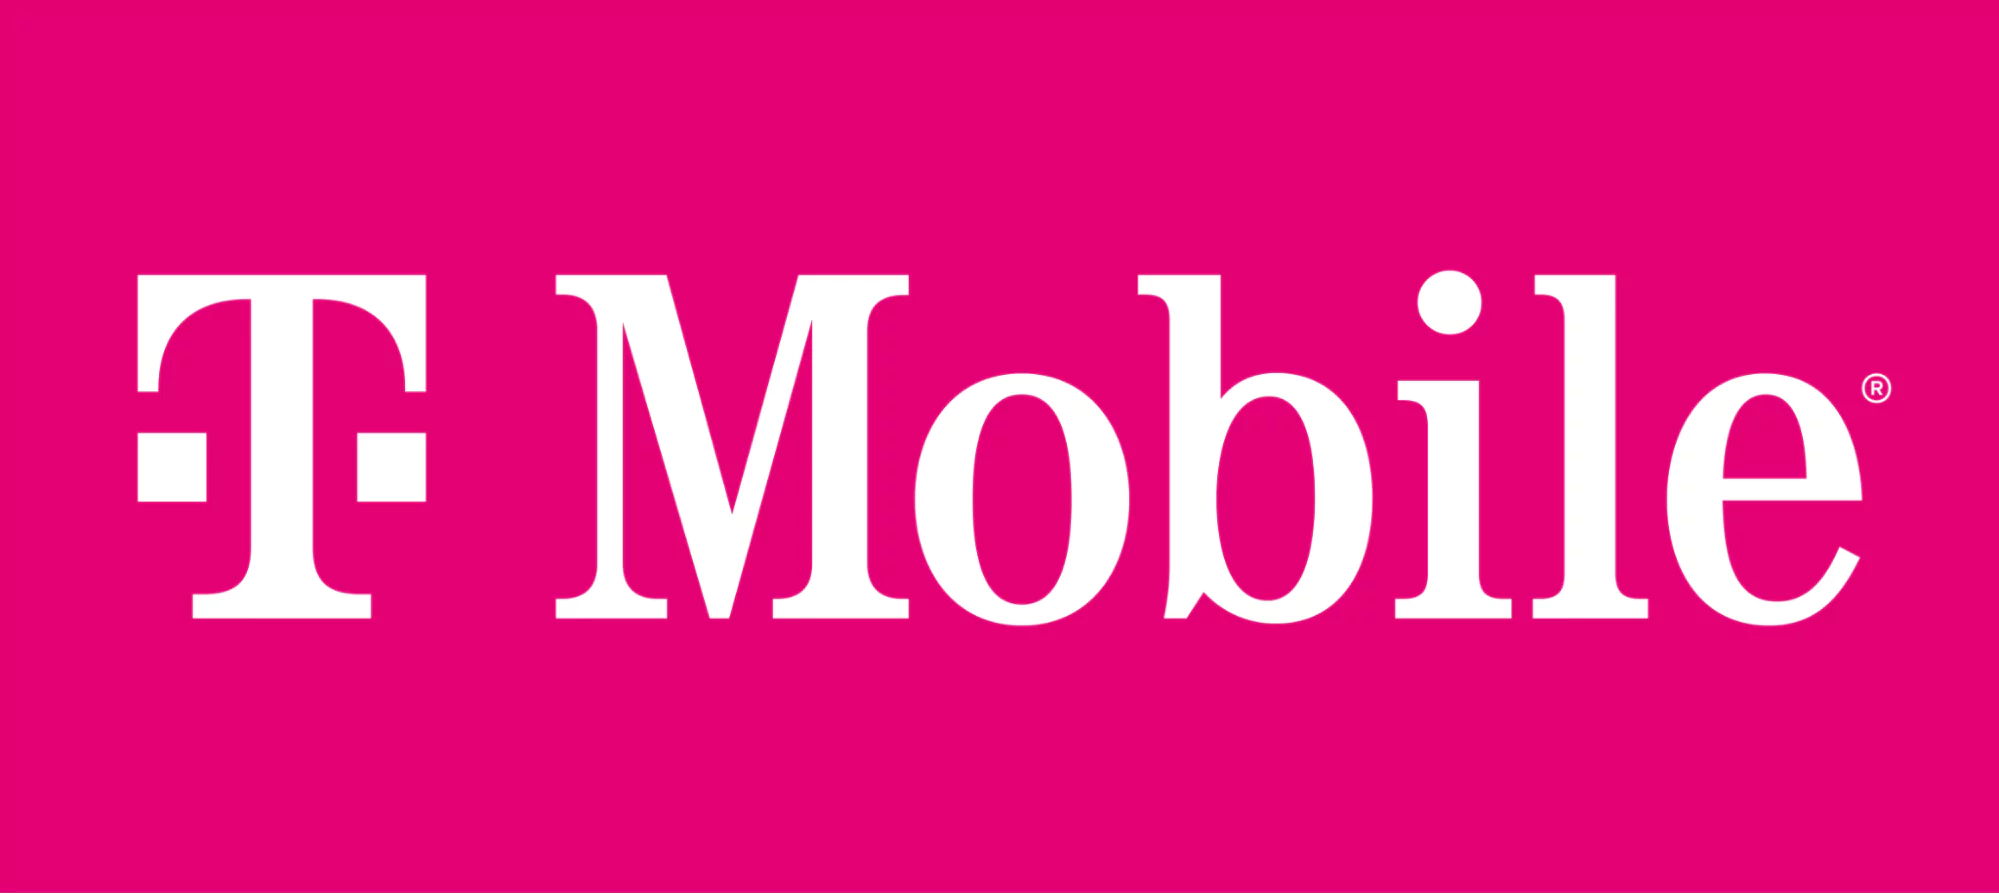 Logotipo T-Mobile magenta com texto branco